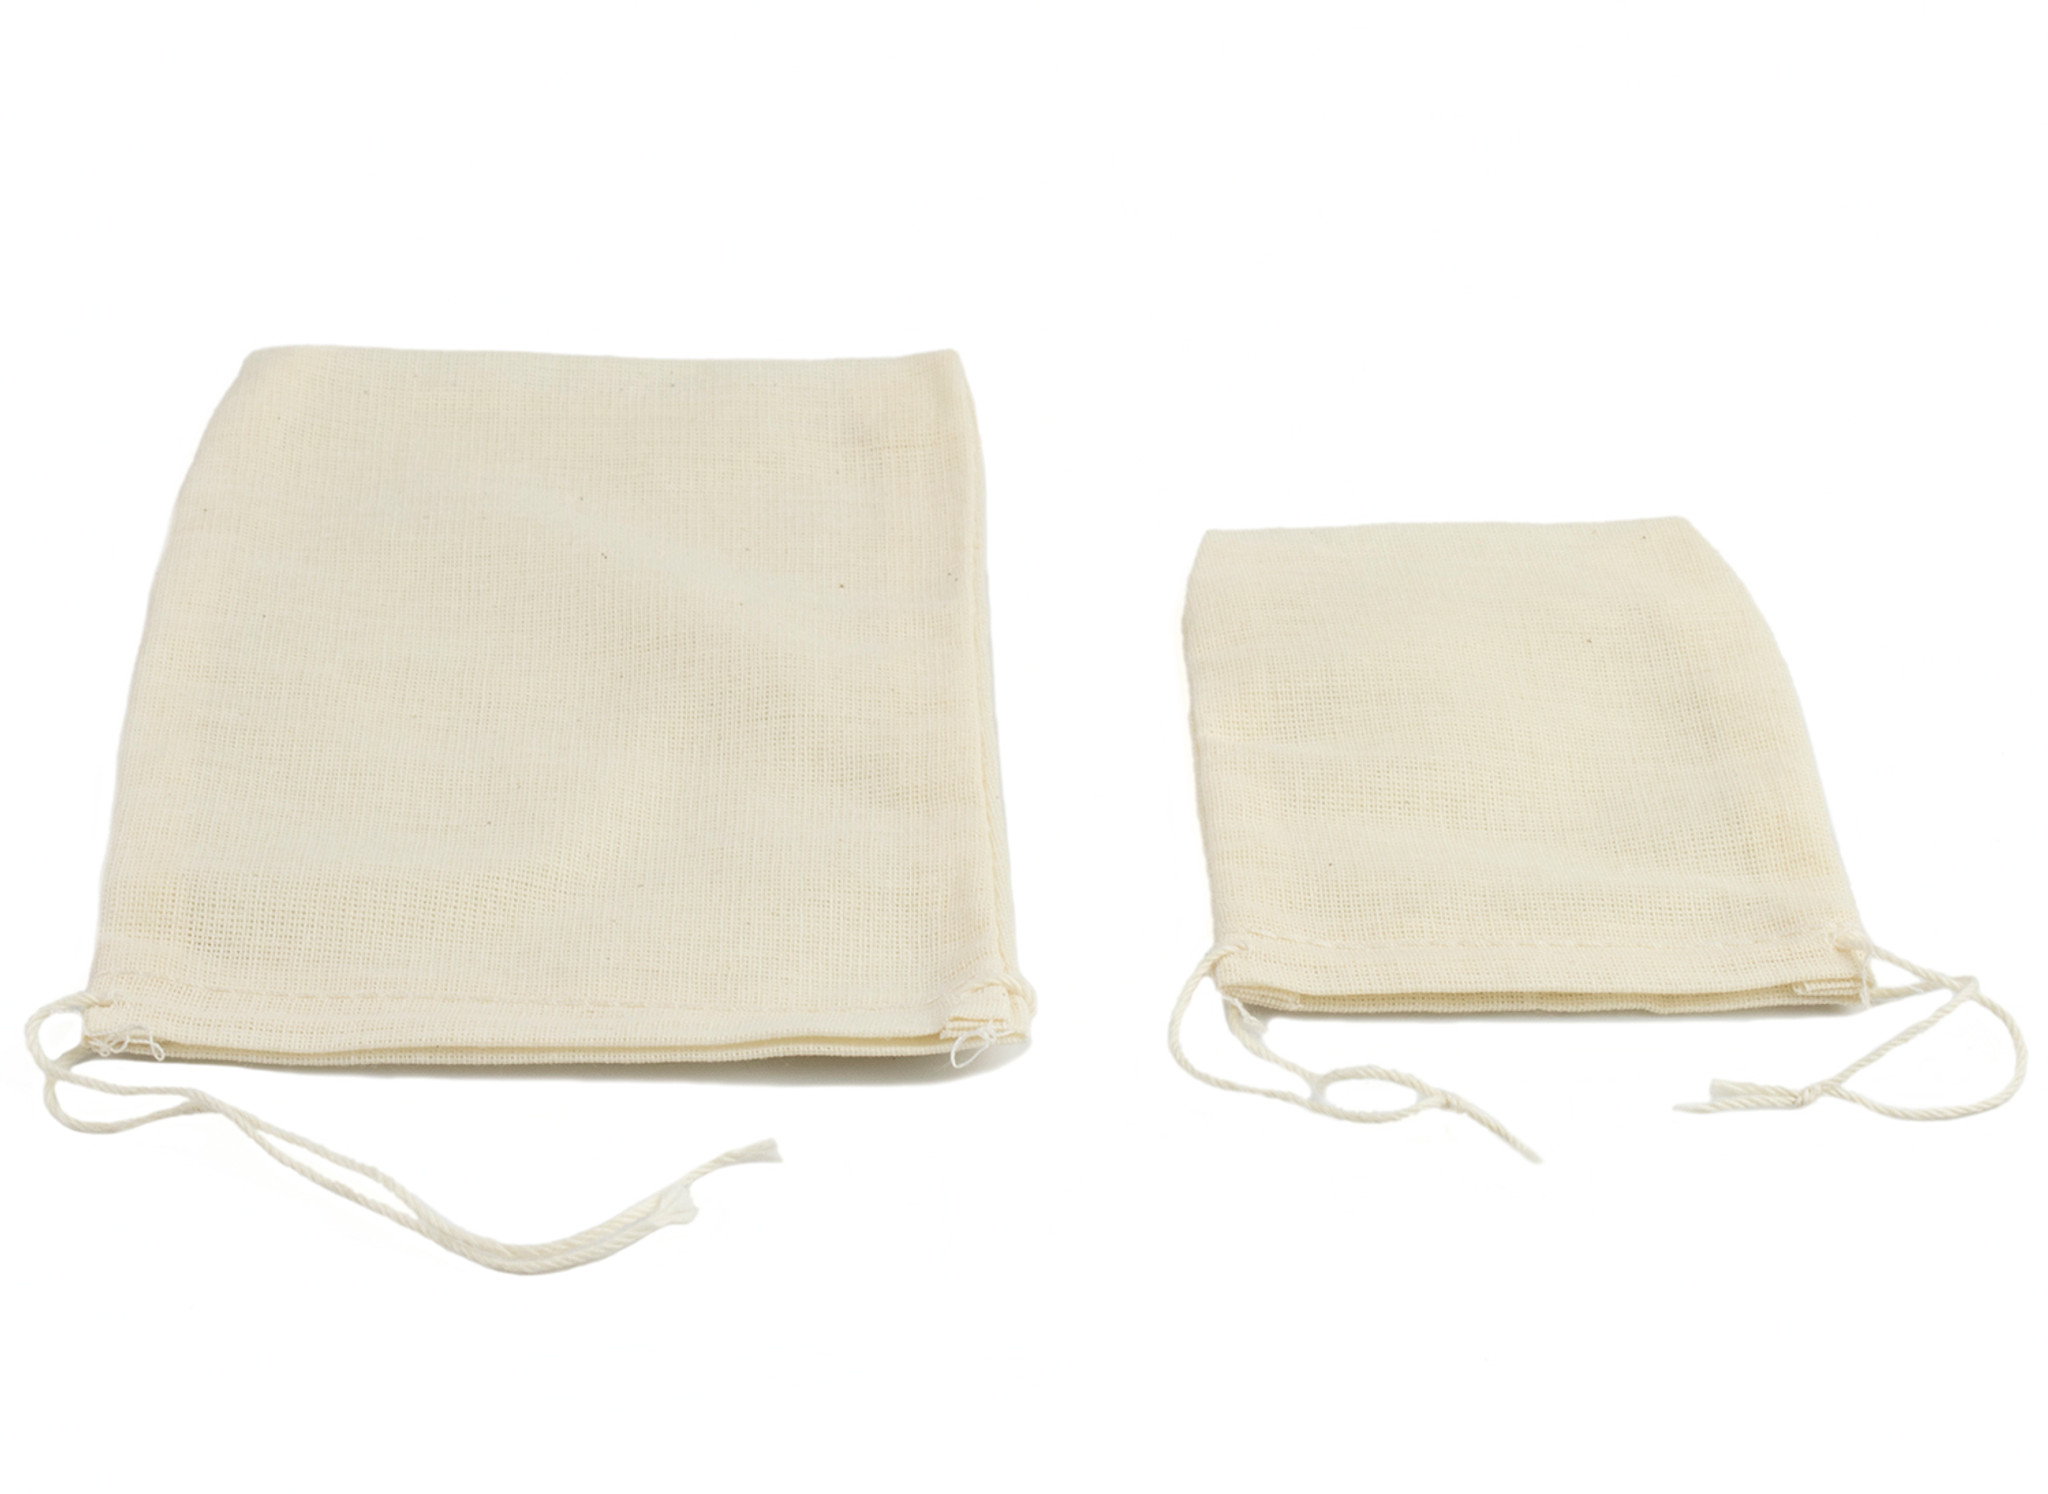 Muslin Bags Sachet Bags Cloth Bags Cheesecloth Tea Bags Gift Bags